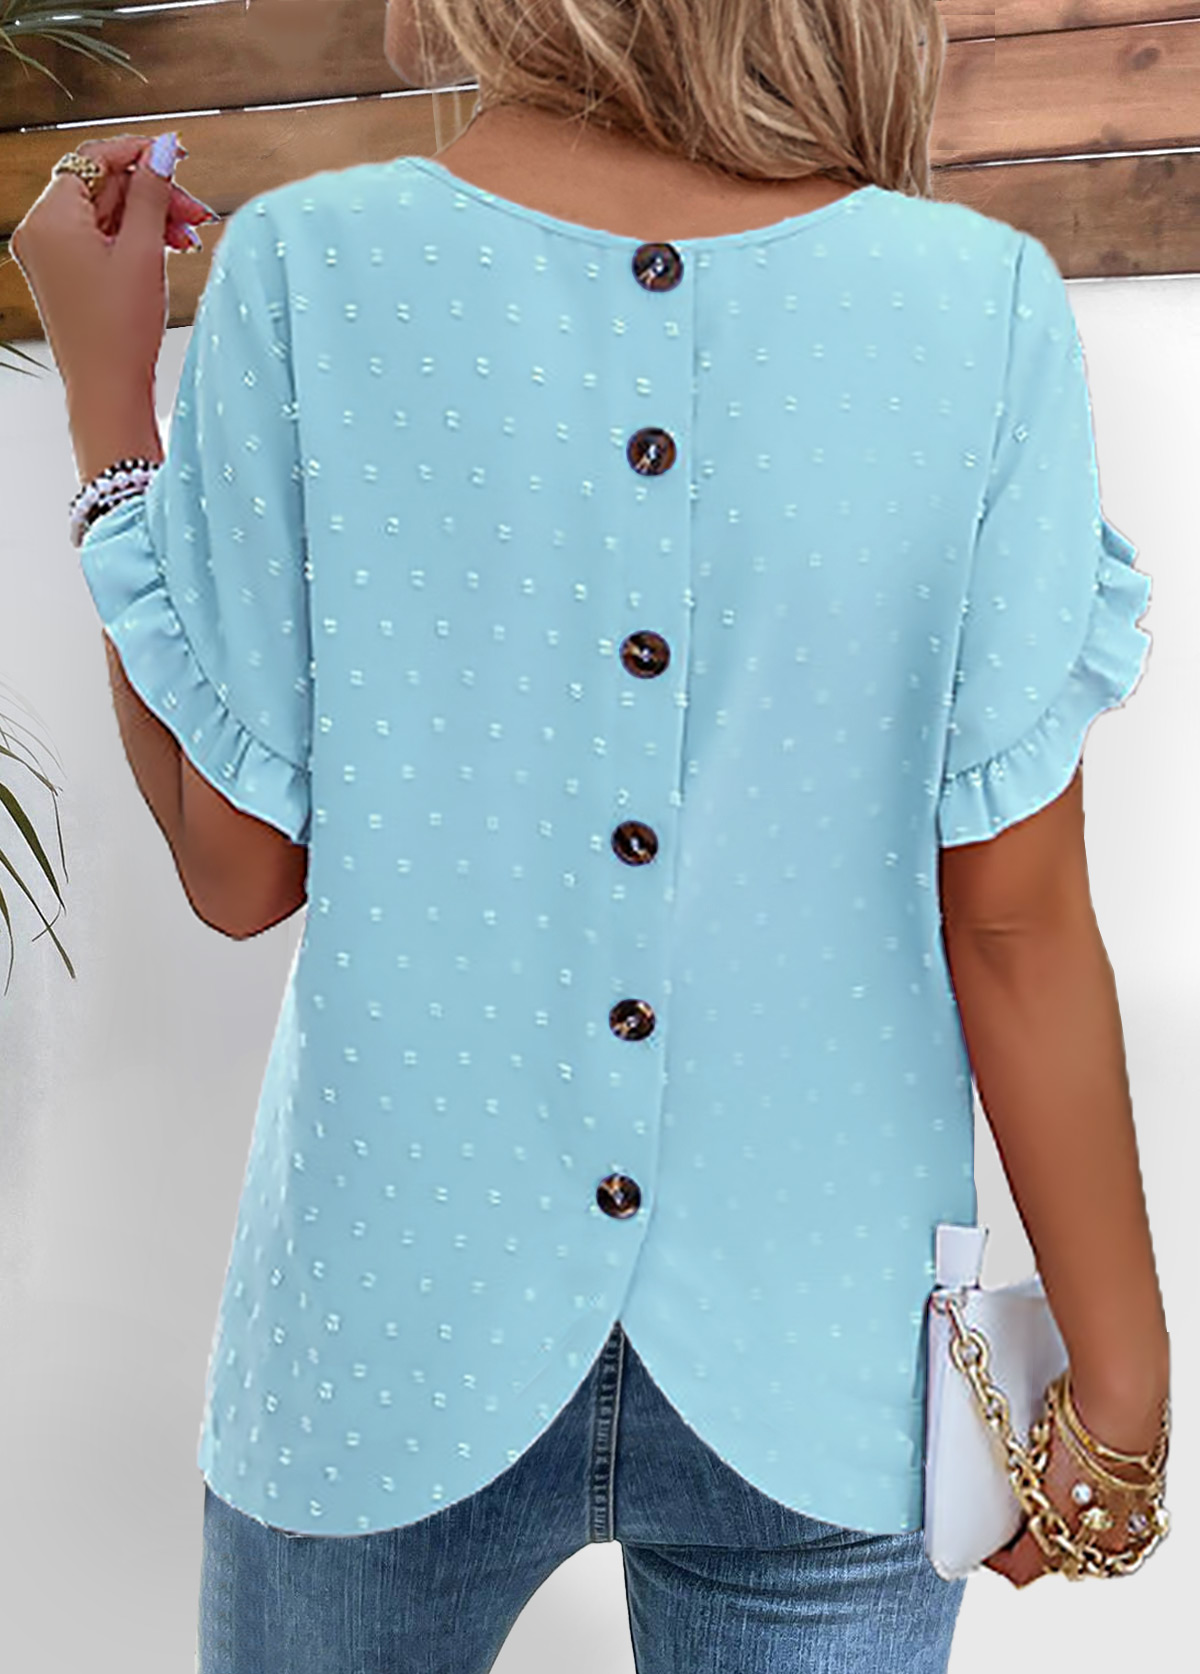 Rotita bouton bleu clair col rond manches courtes blouse